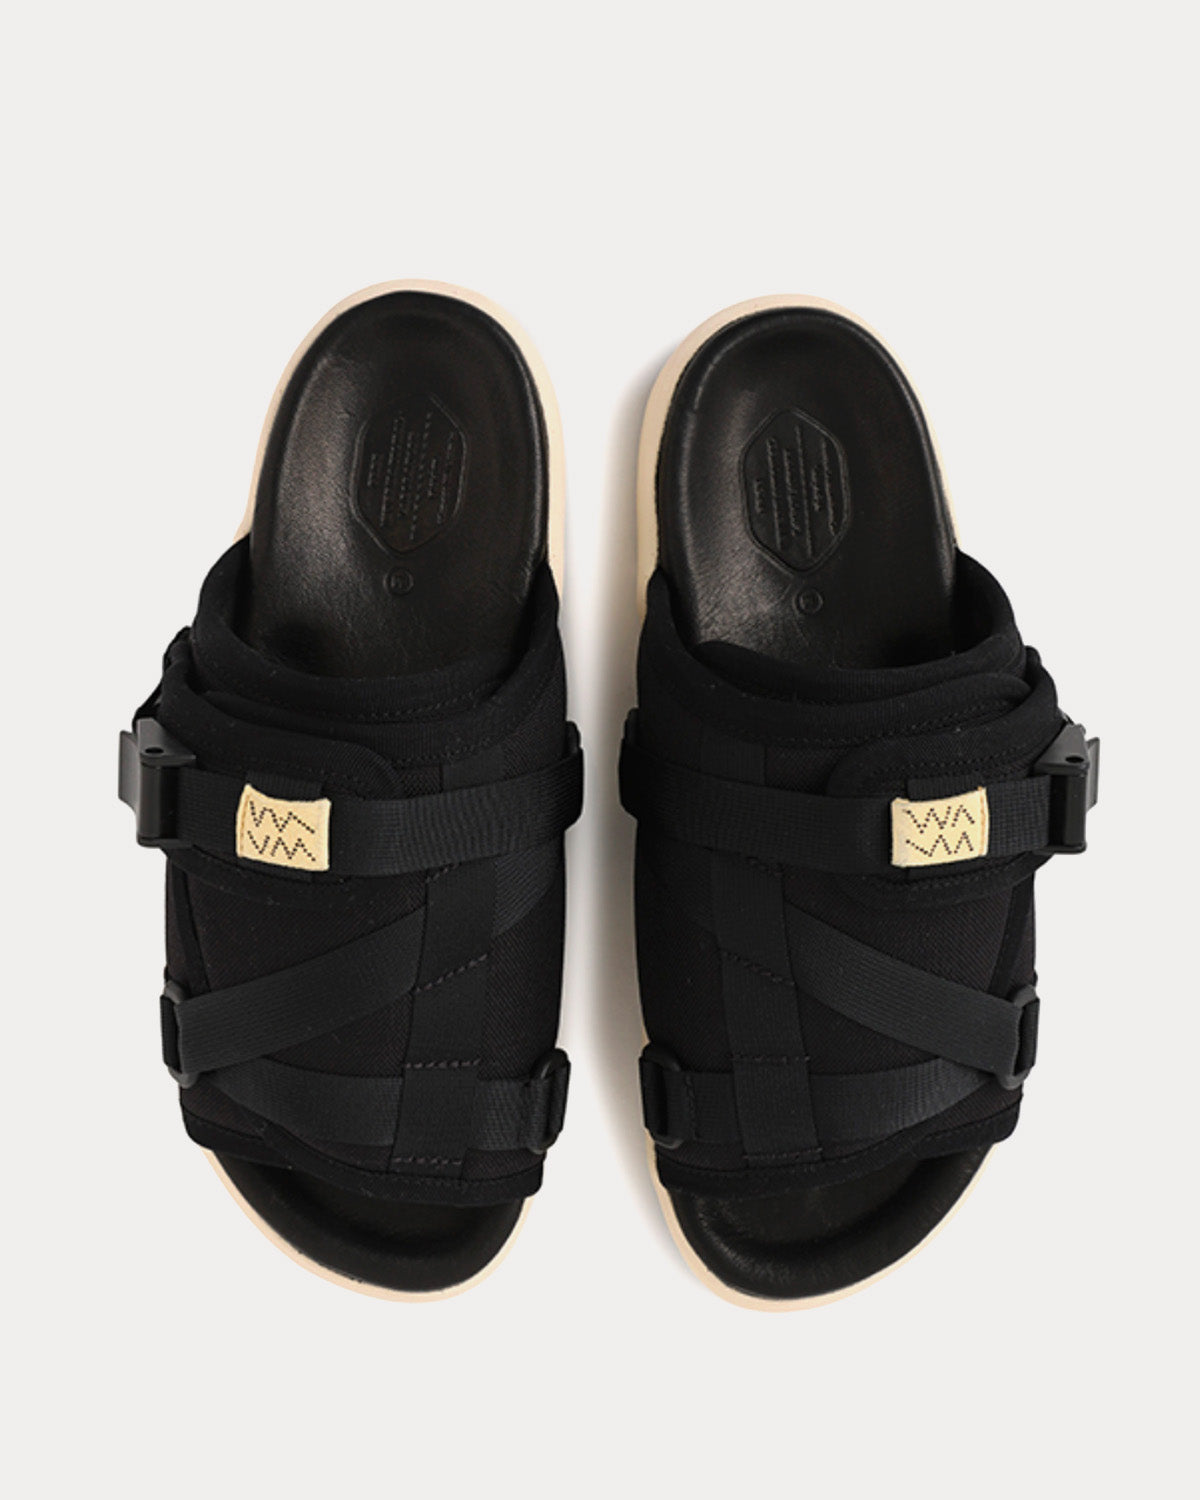 Visvim Christo Black Sandals - Sneak in Peace